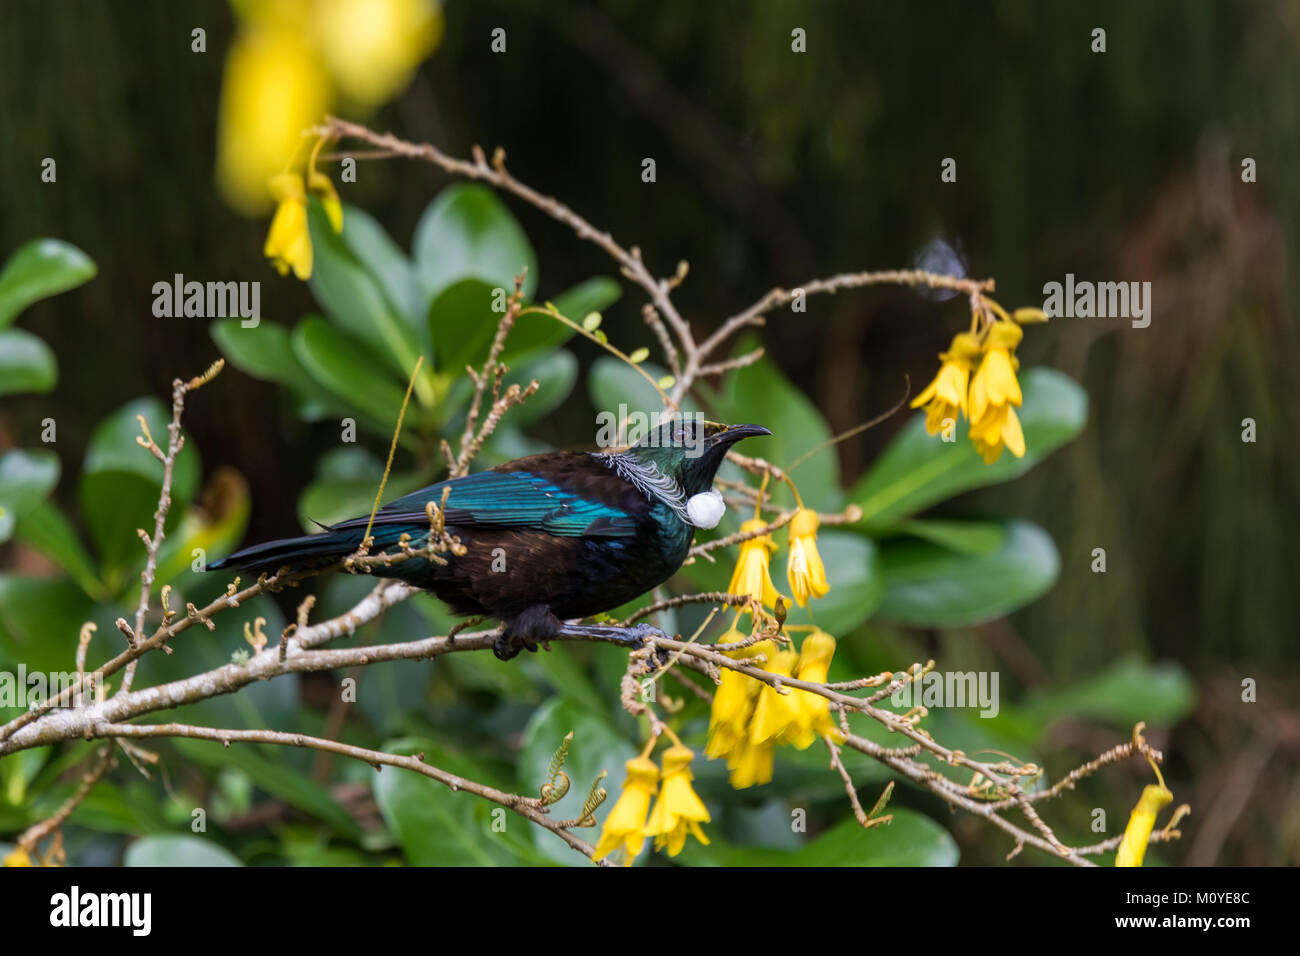 The native Tui bird of New Zealand feeding on Kowhai flowers Stock Photo